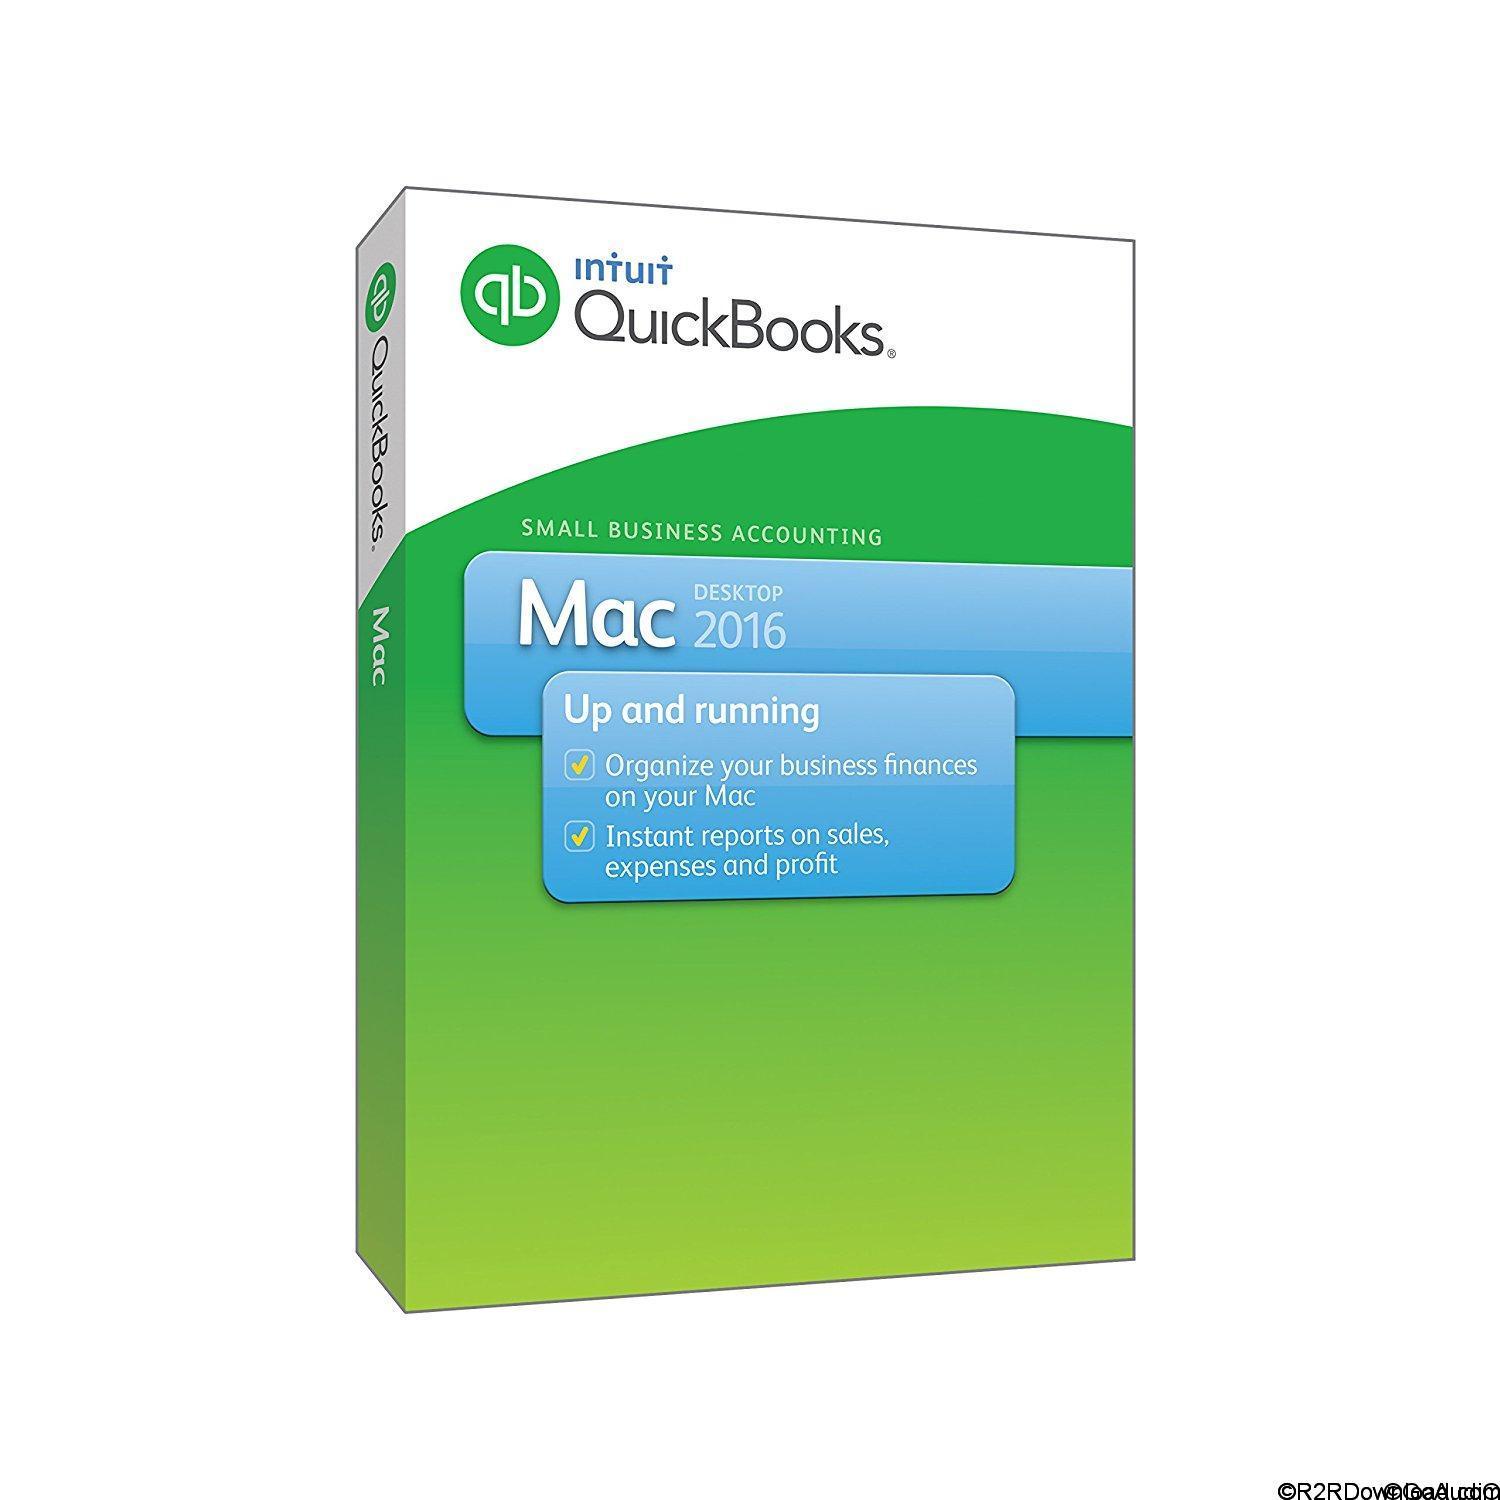 Intuit QuickBooks 2016 17.1.17 R18 Free Download (Mac OS X)